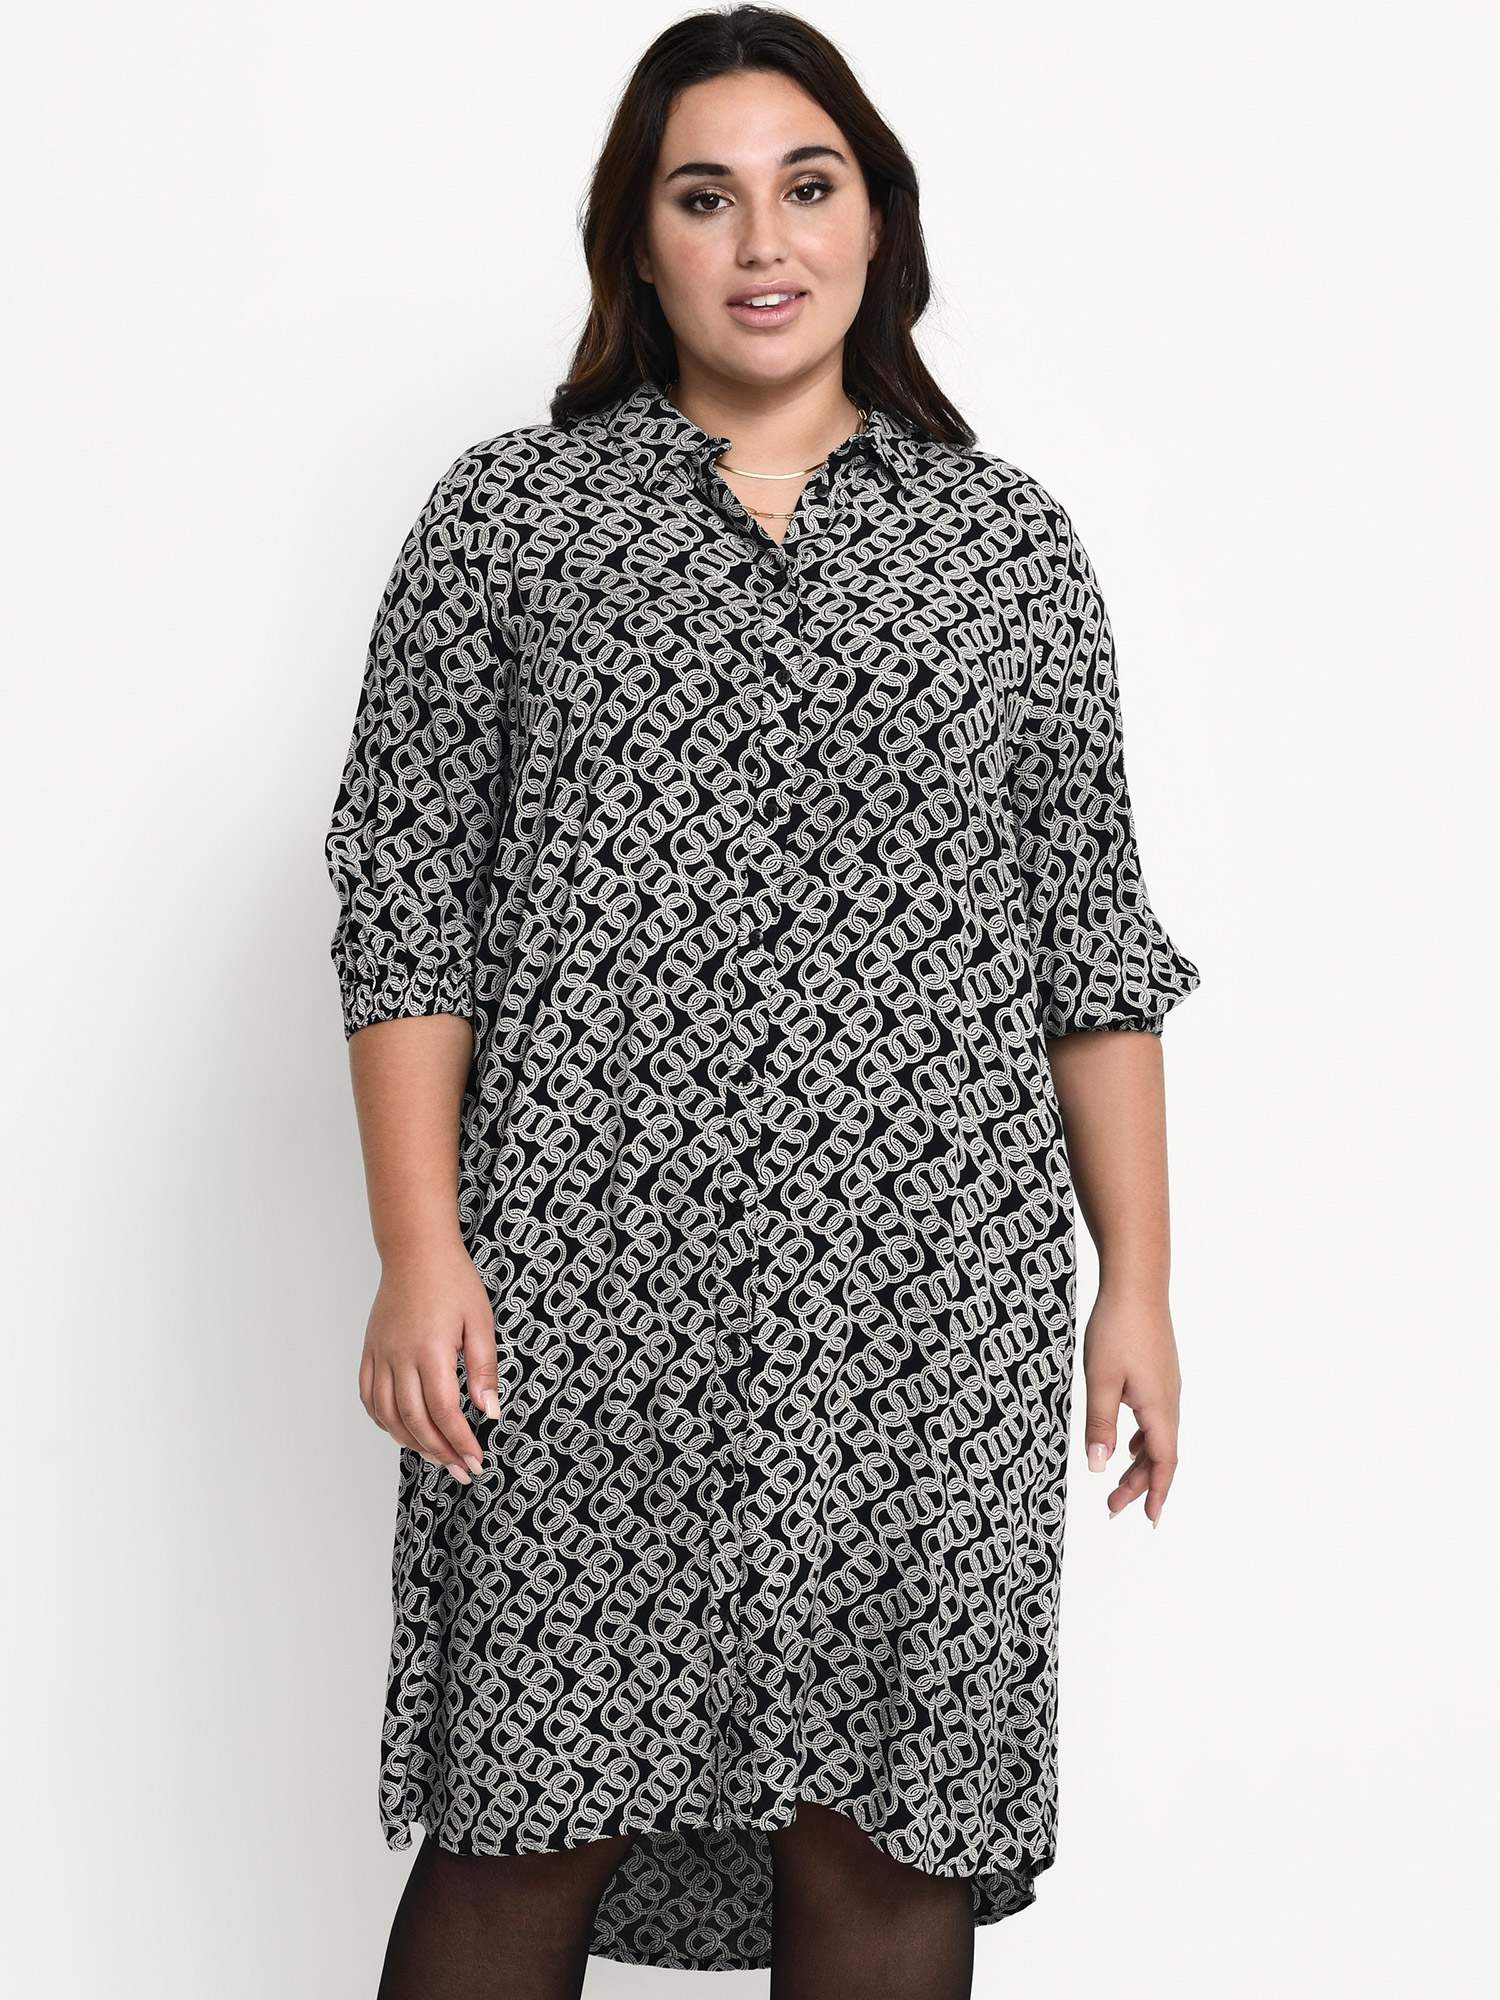 KC LIANA - Flot sort viskose skjorte kjole med beige mønster fra Kaffe Curve